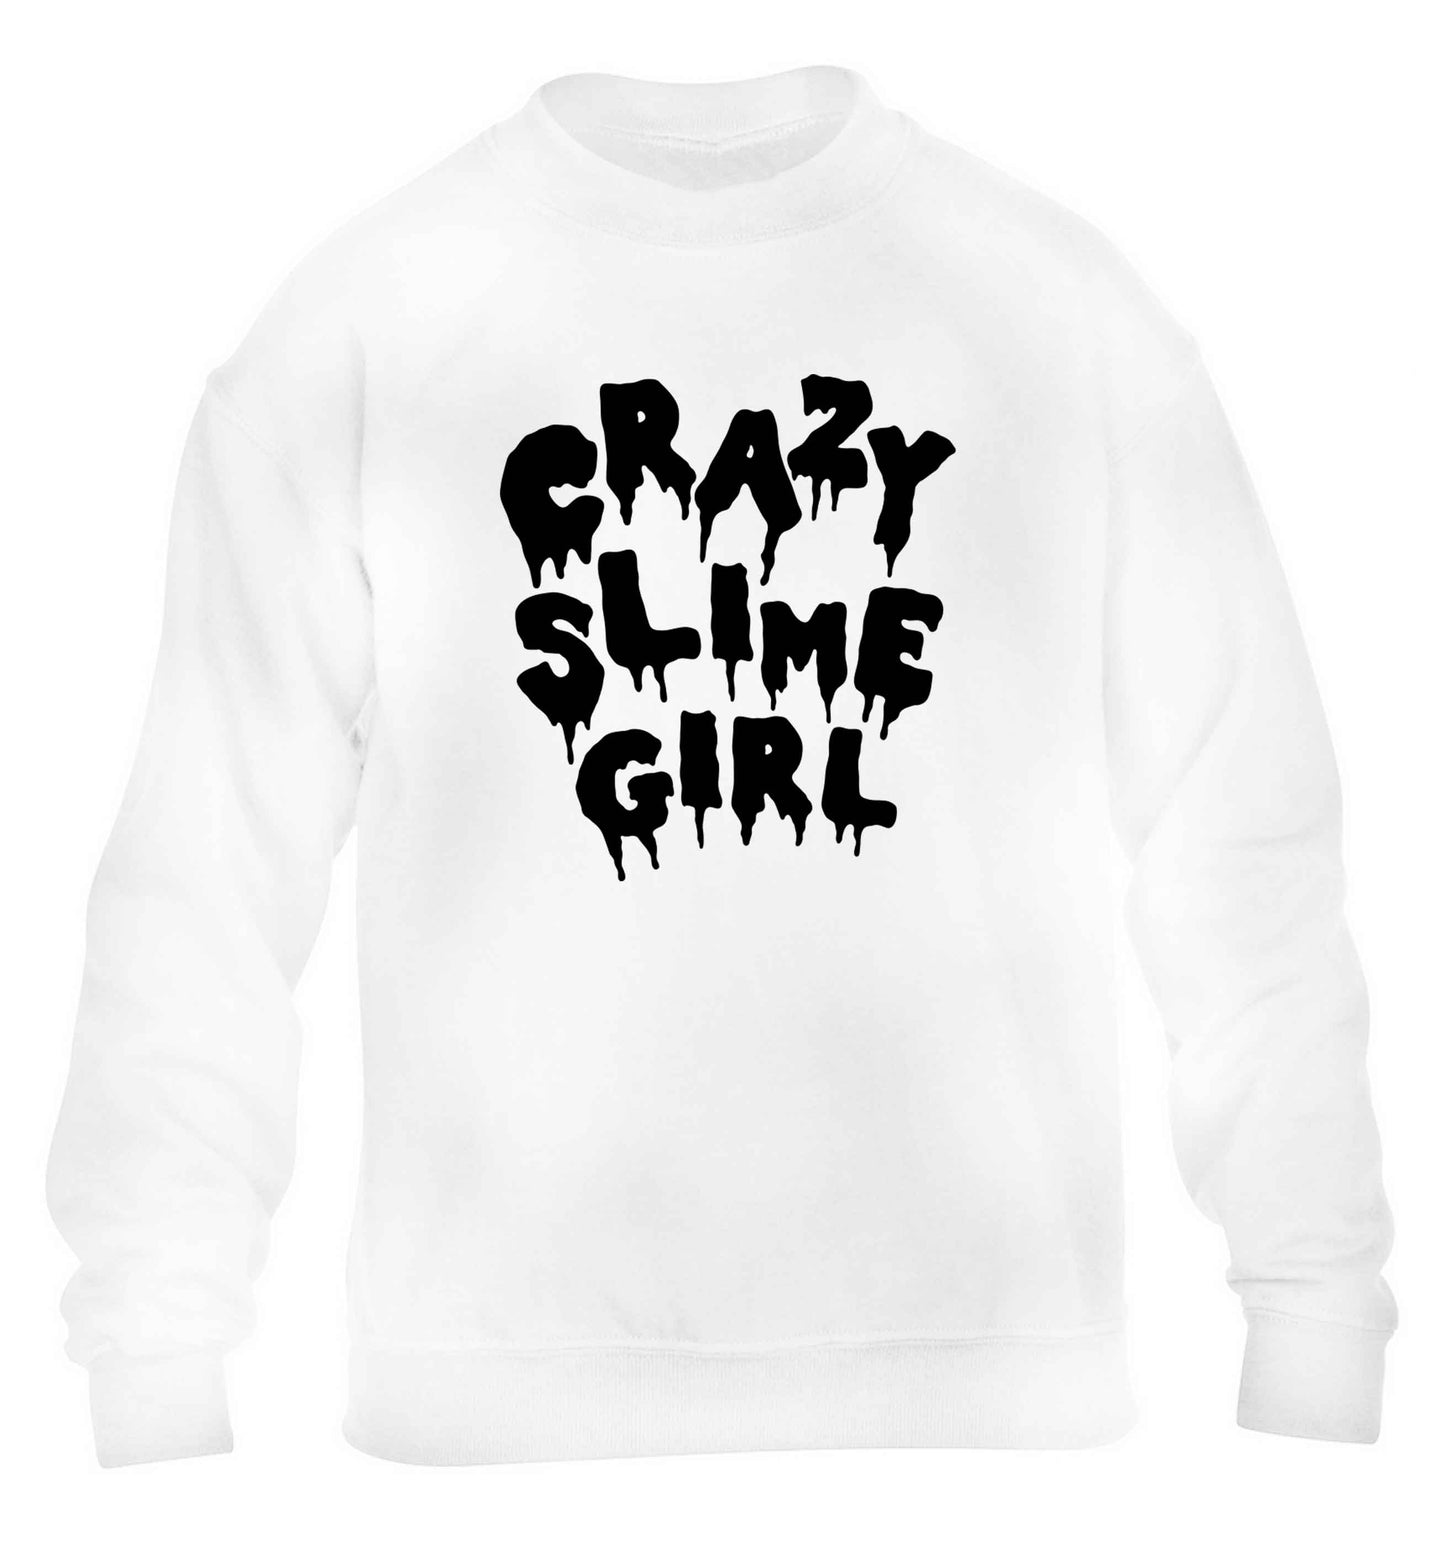 Crazy slime girl children's white sweater 12-13 Years